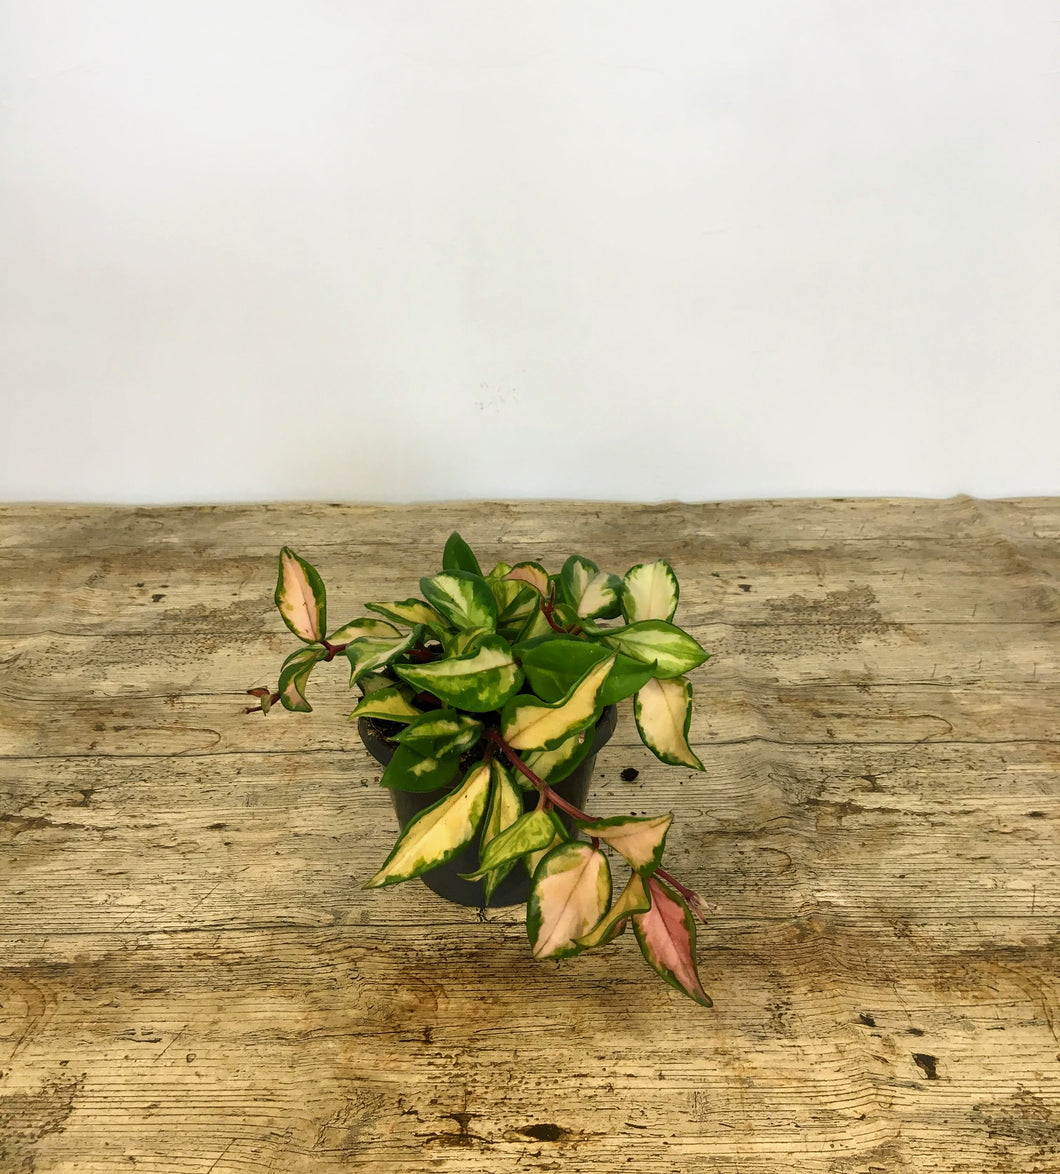 Hoya carnosa tricolour - wax flower